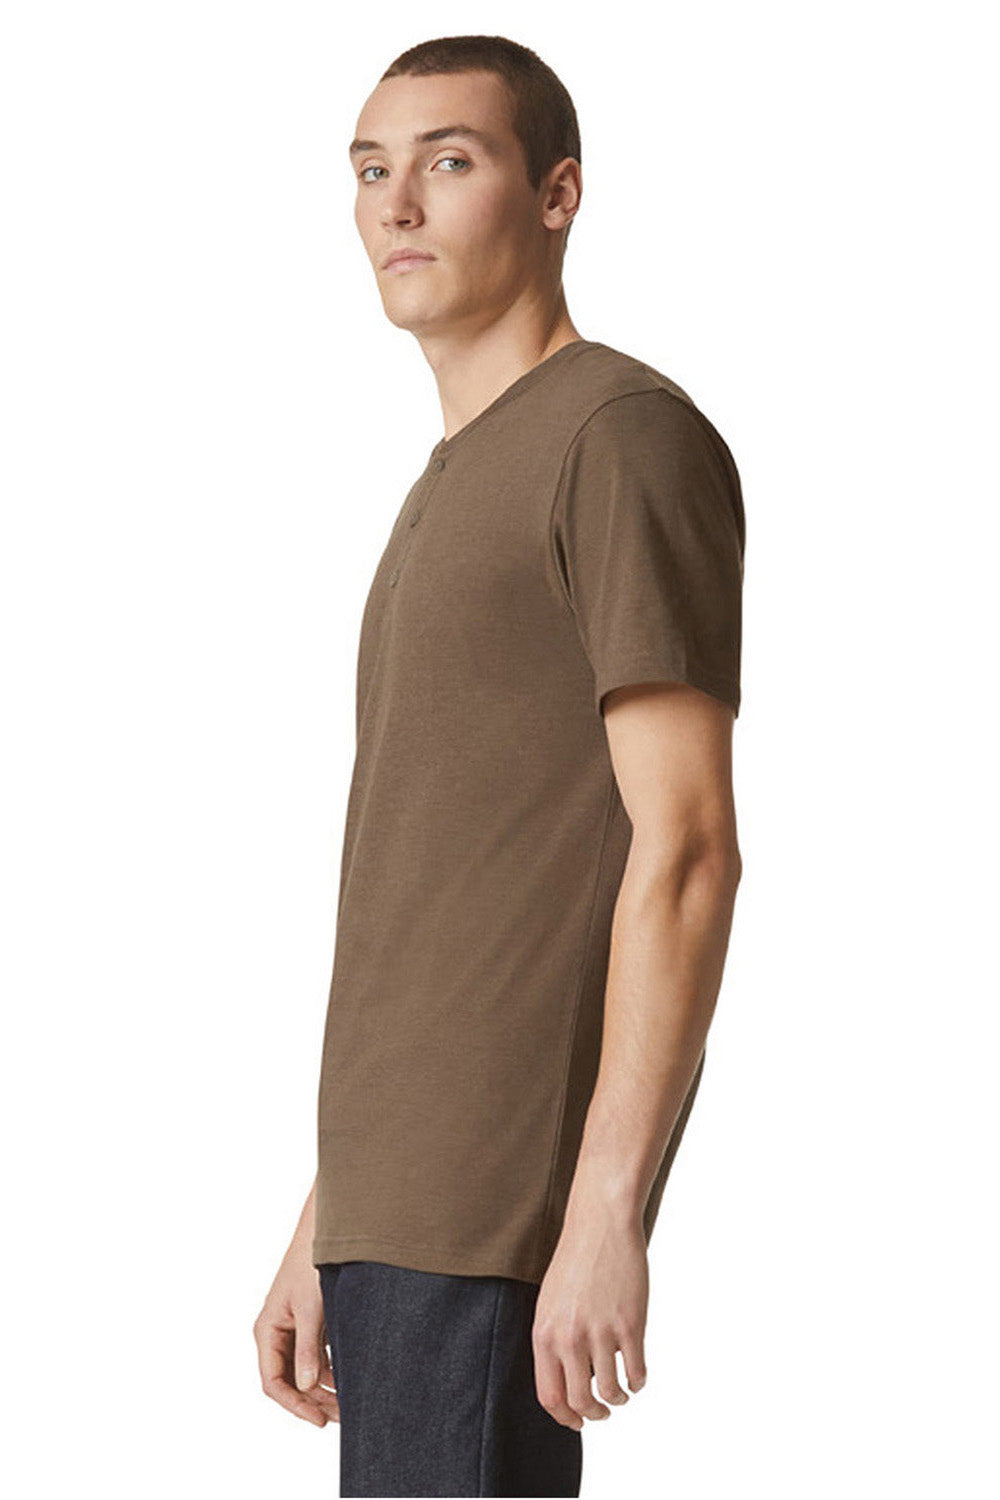 American Apparel 2004CVC Mens CVC Short Sleeve Henley T-Shirt Heather Army Model Side